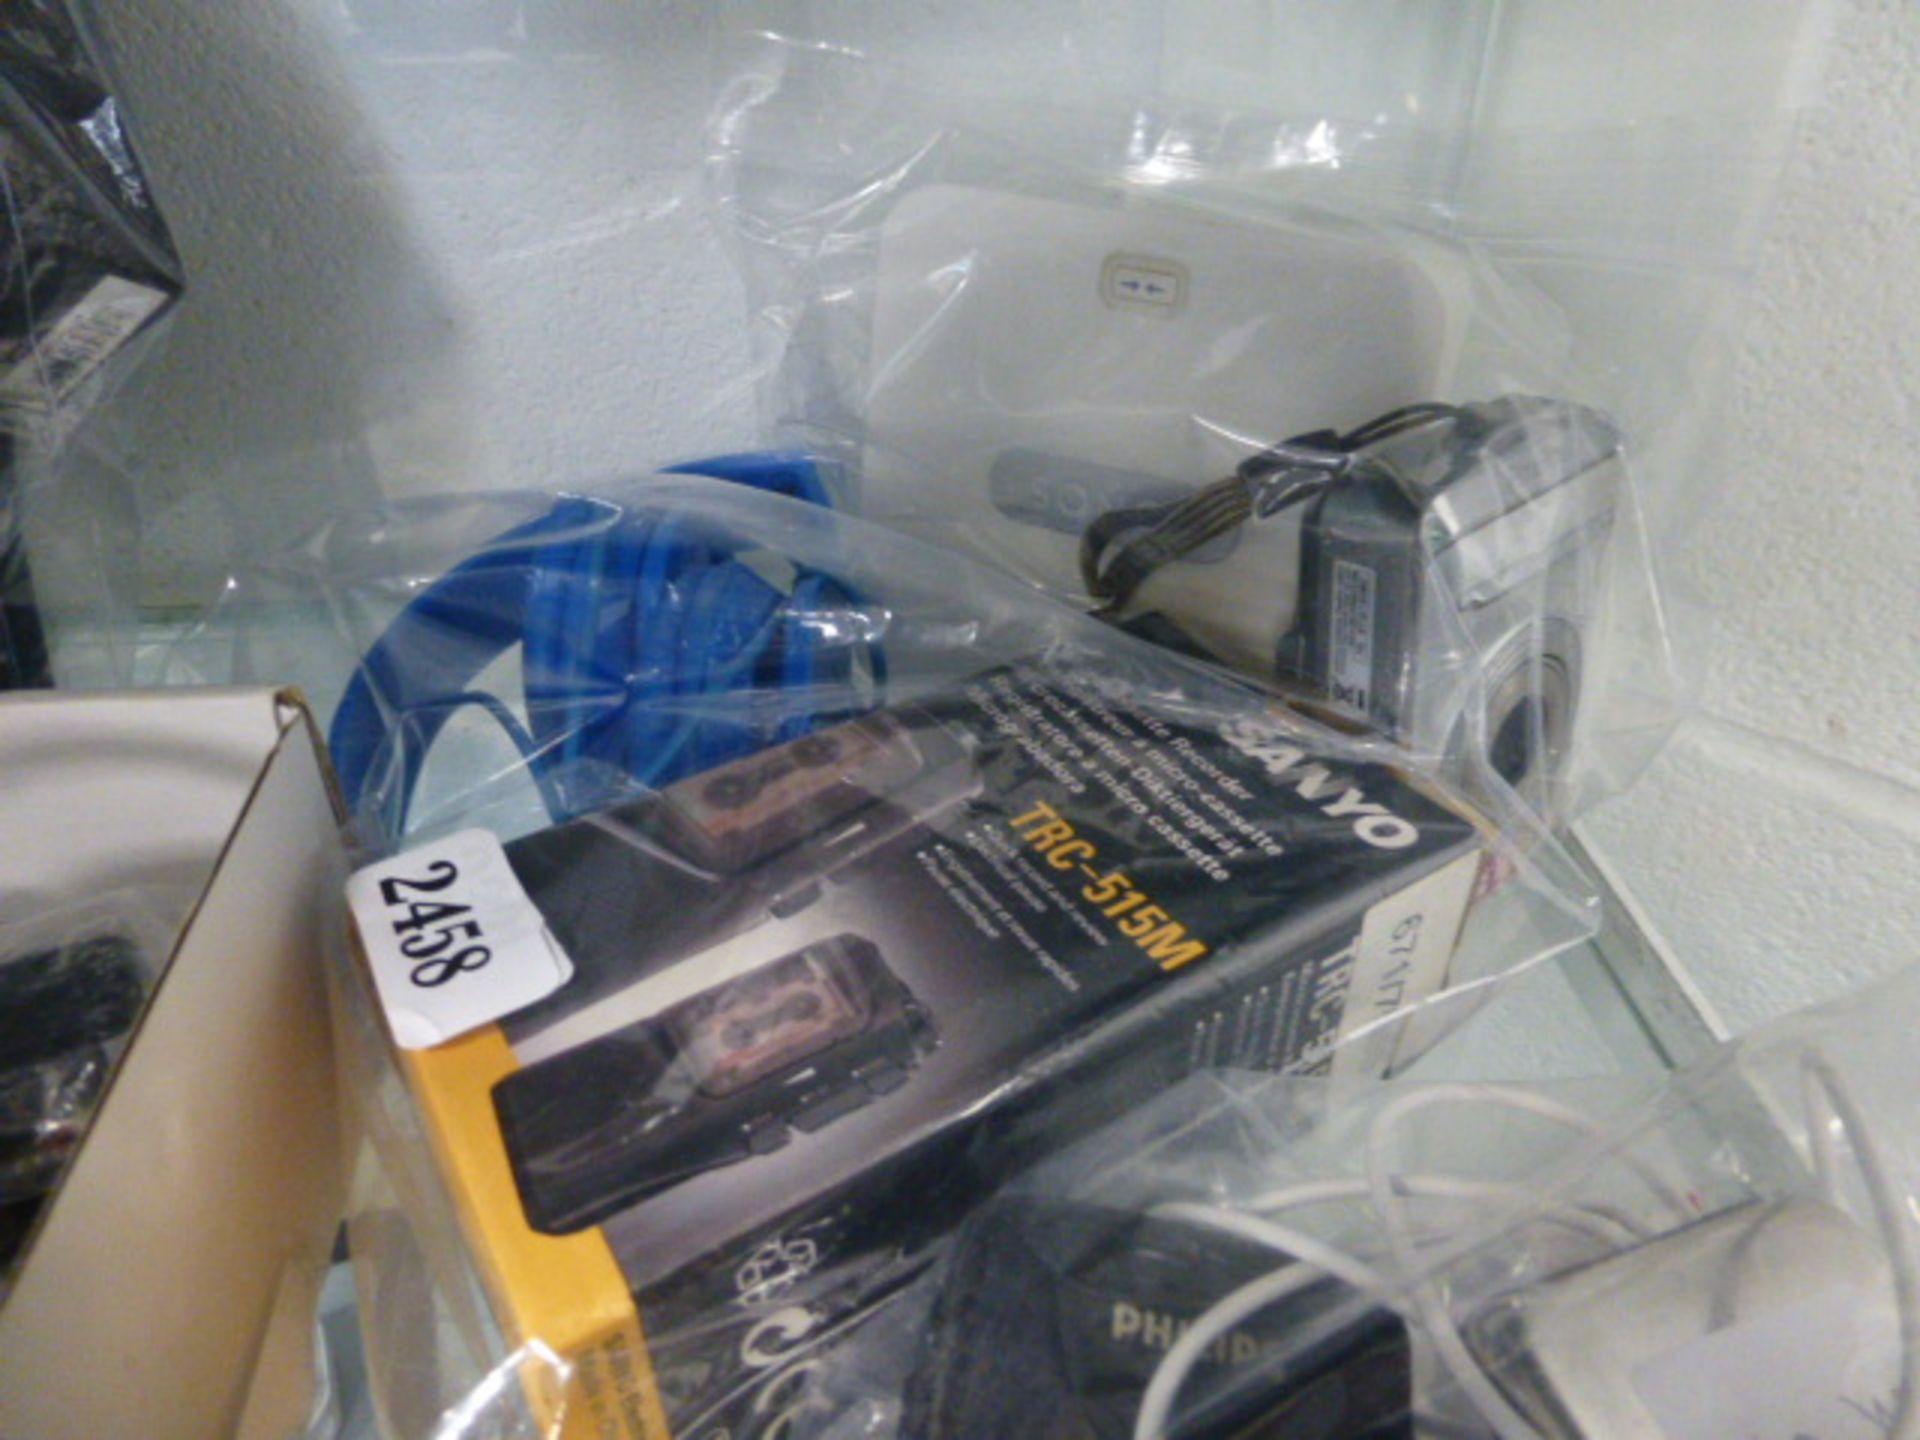 2321 Bag containing Sonos network bridge, digital camera and headphones